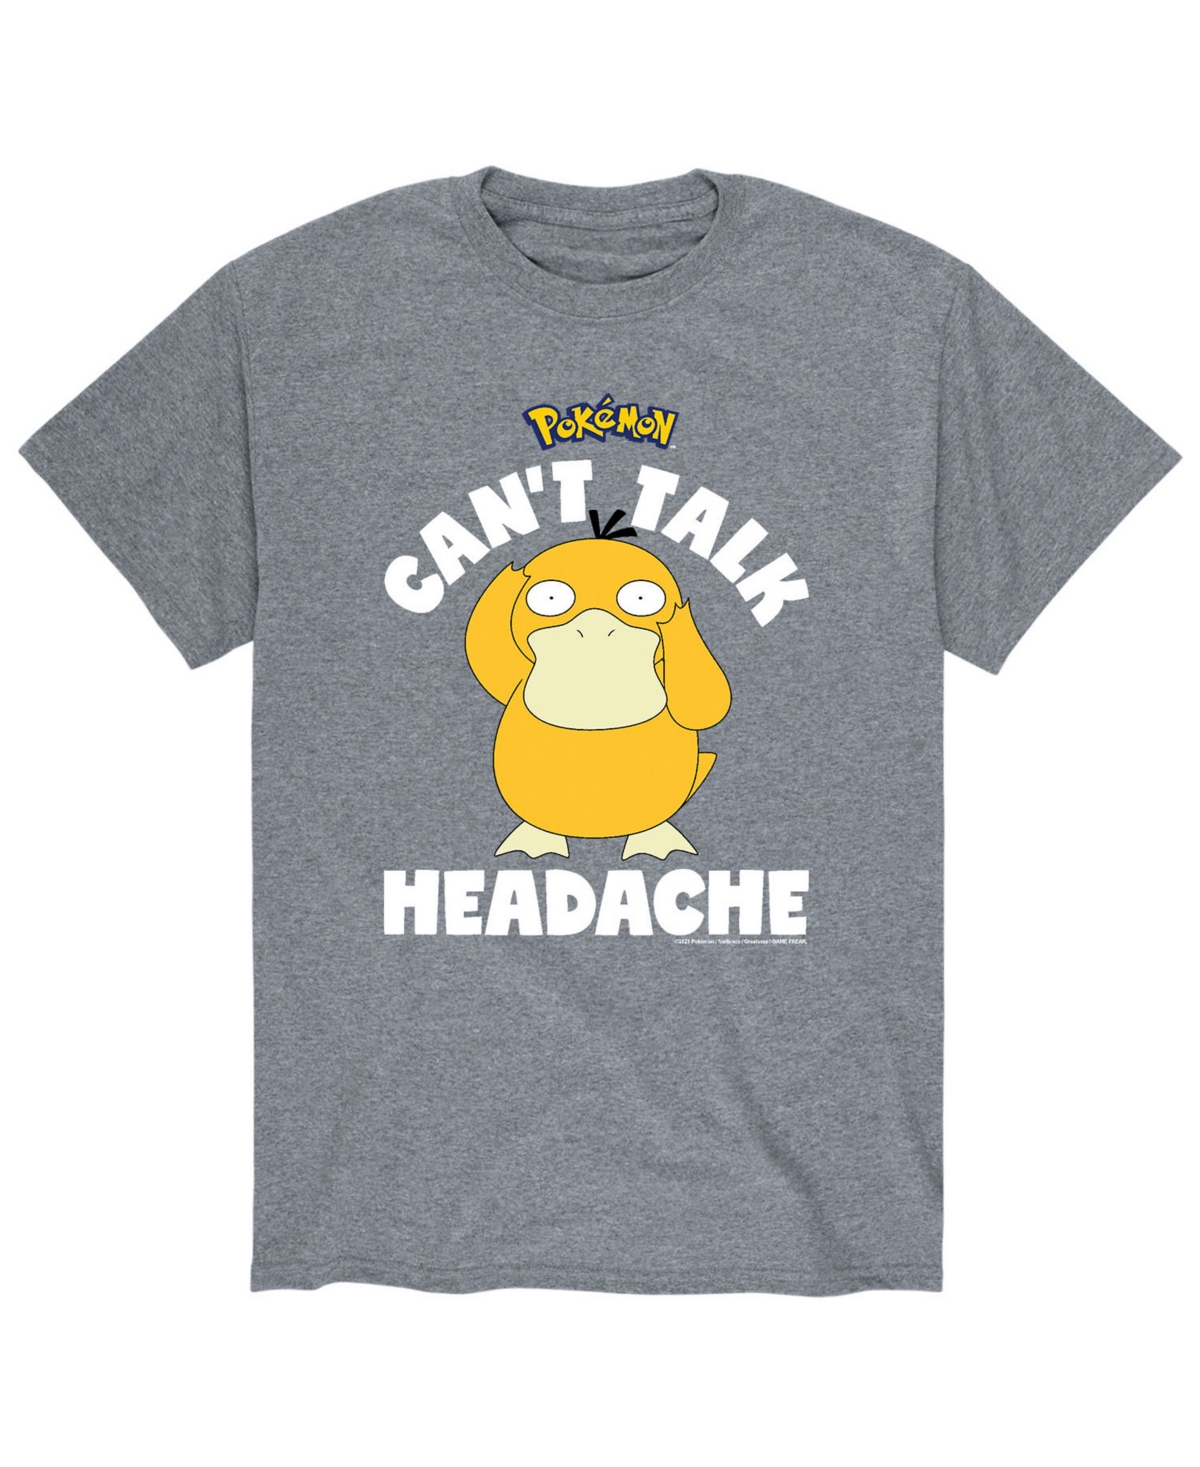 Airwaves Men's Pokemon Can't Talk Headache T-shirt